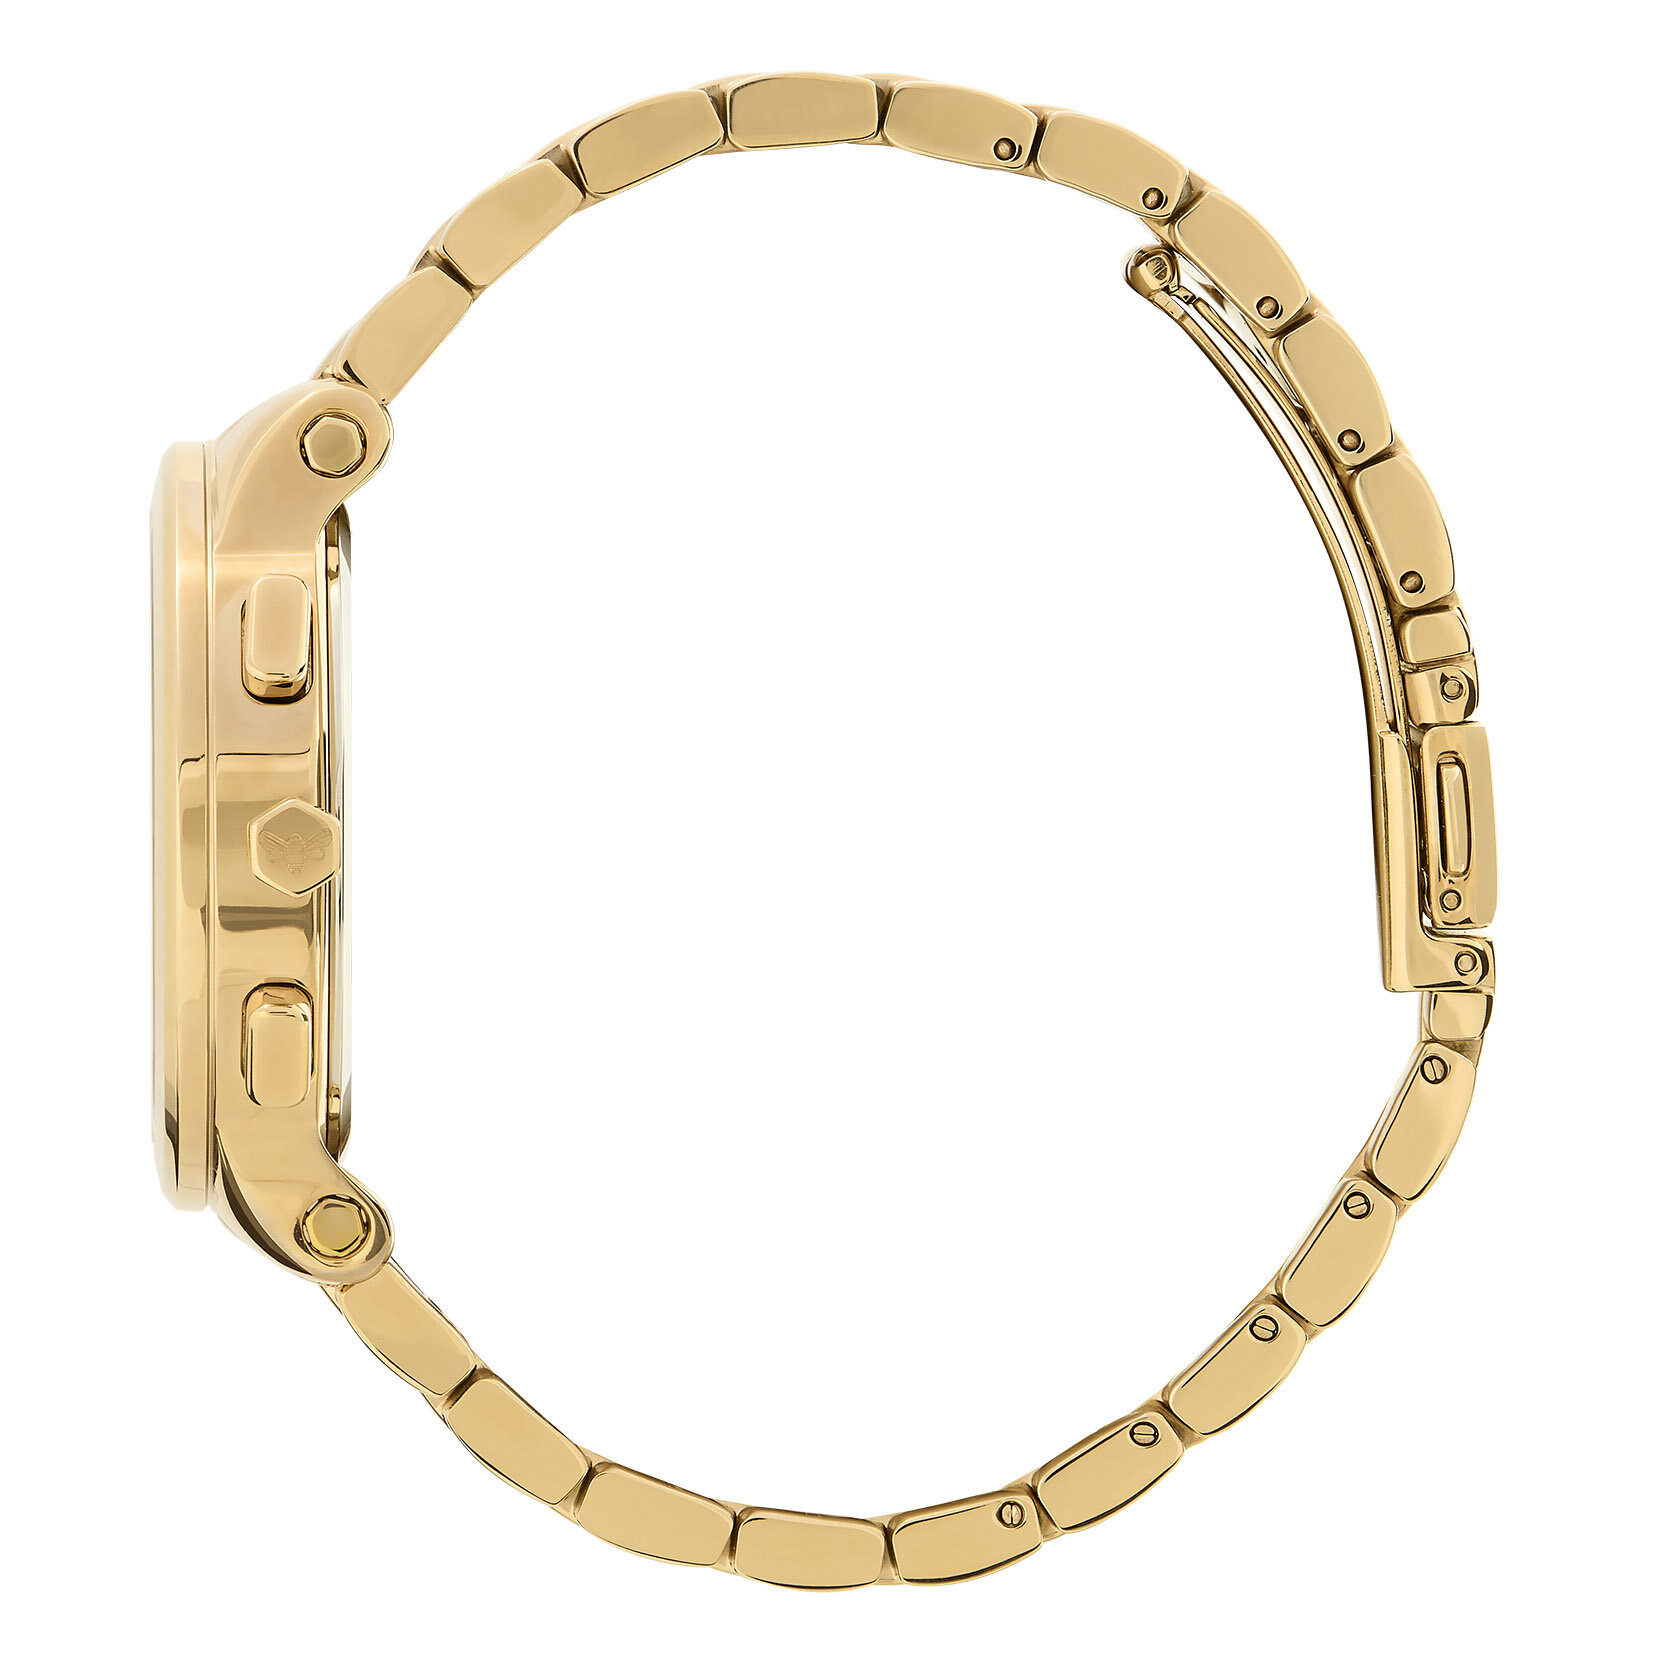 38mm Multi-Function Champagne & Gold Bracelet Watch